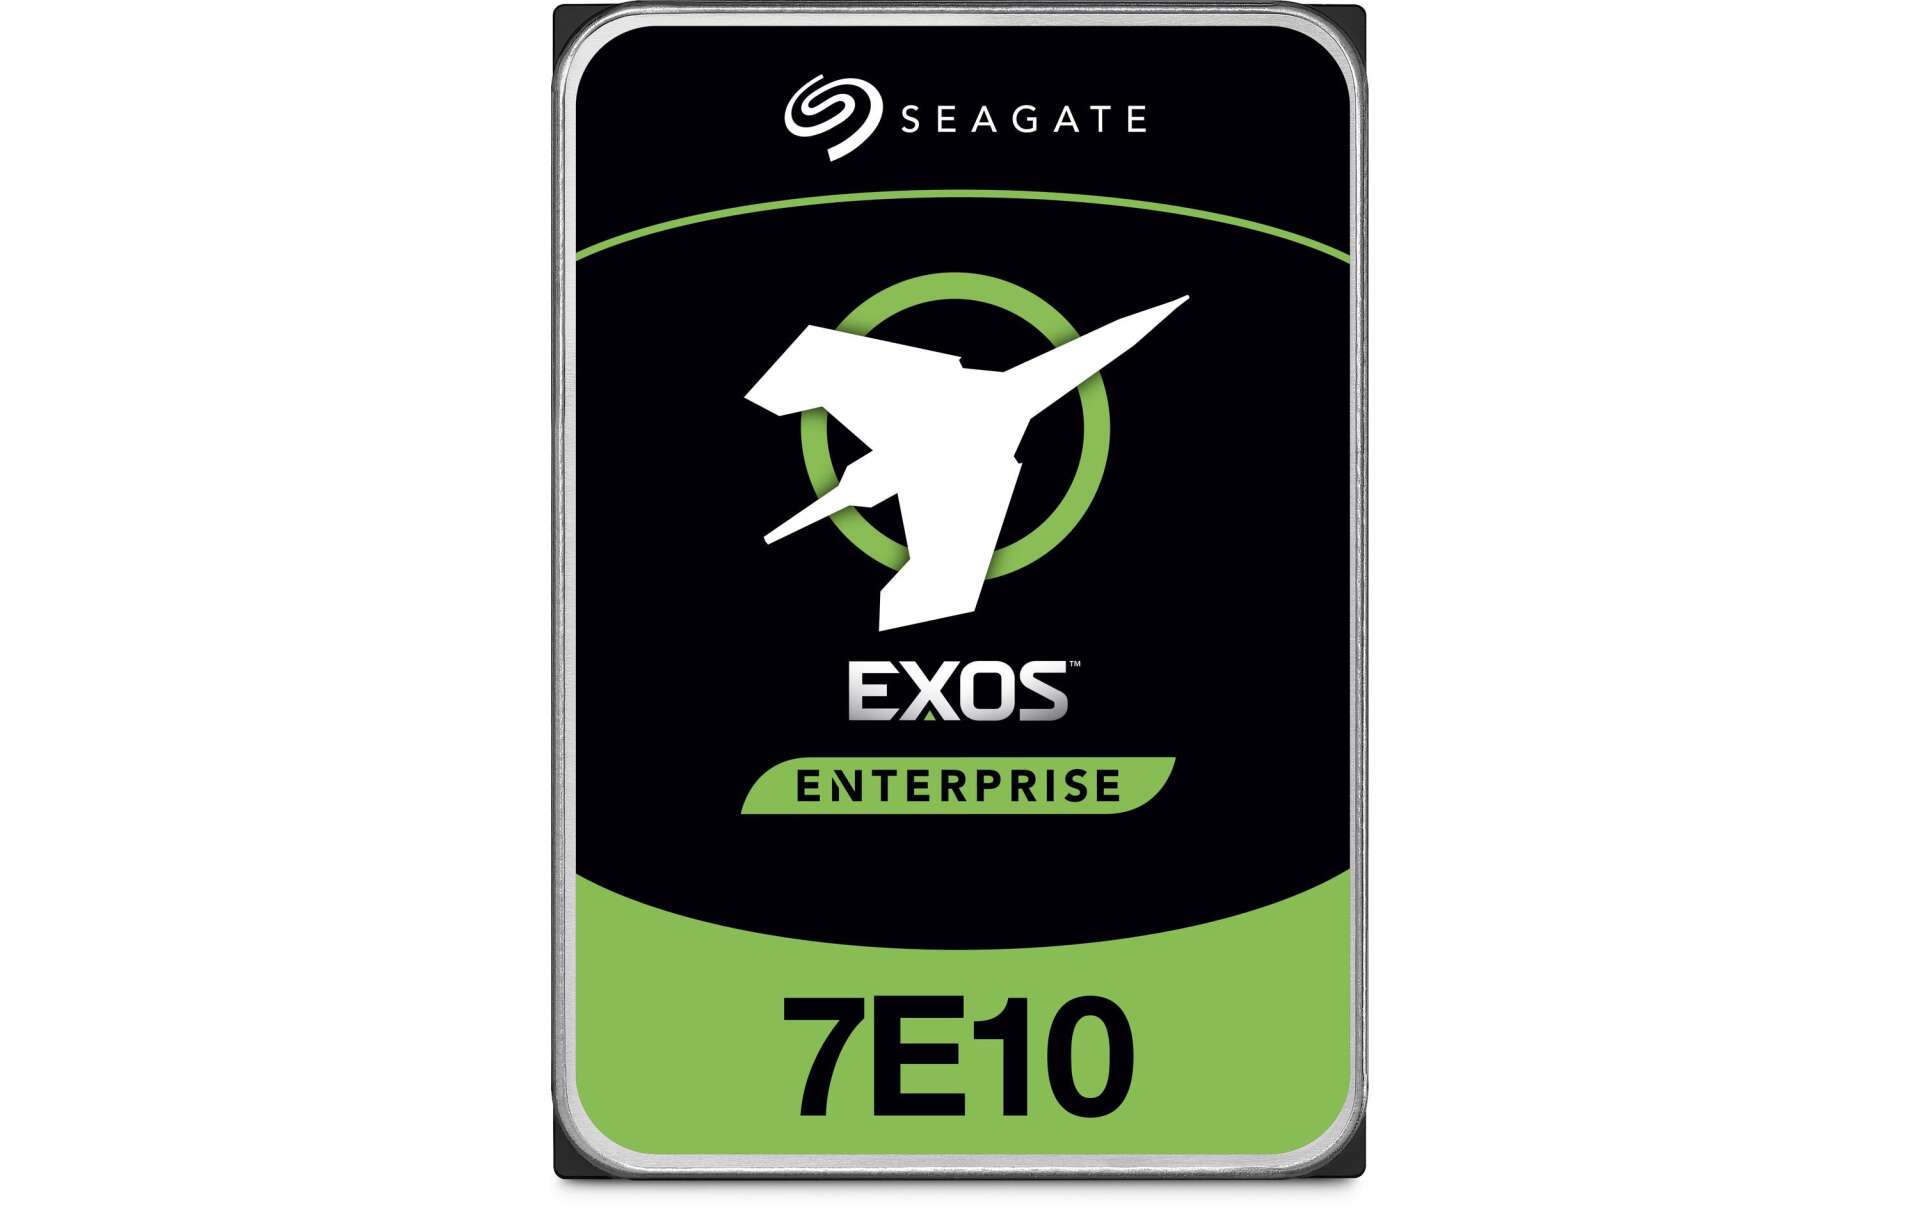 Seagate 2tb exos enterprise 7e10 (512e/4kn, fastformat) sas 3.5"...